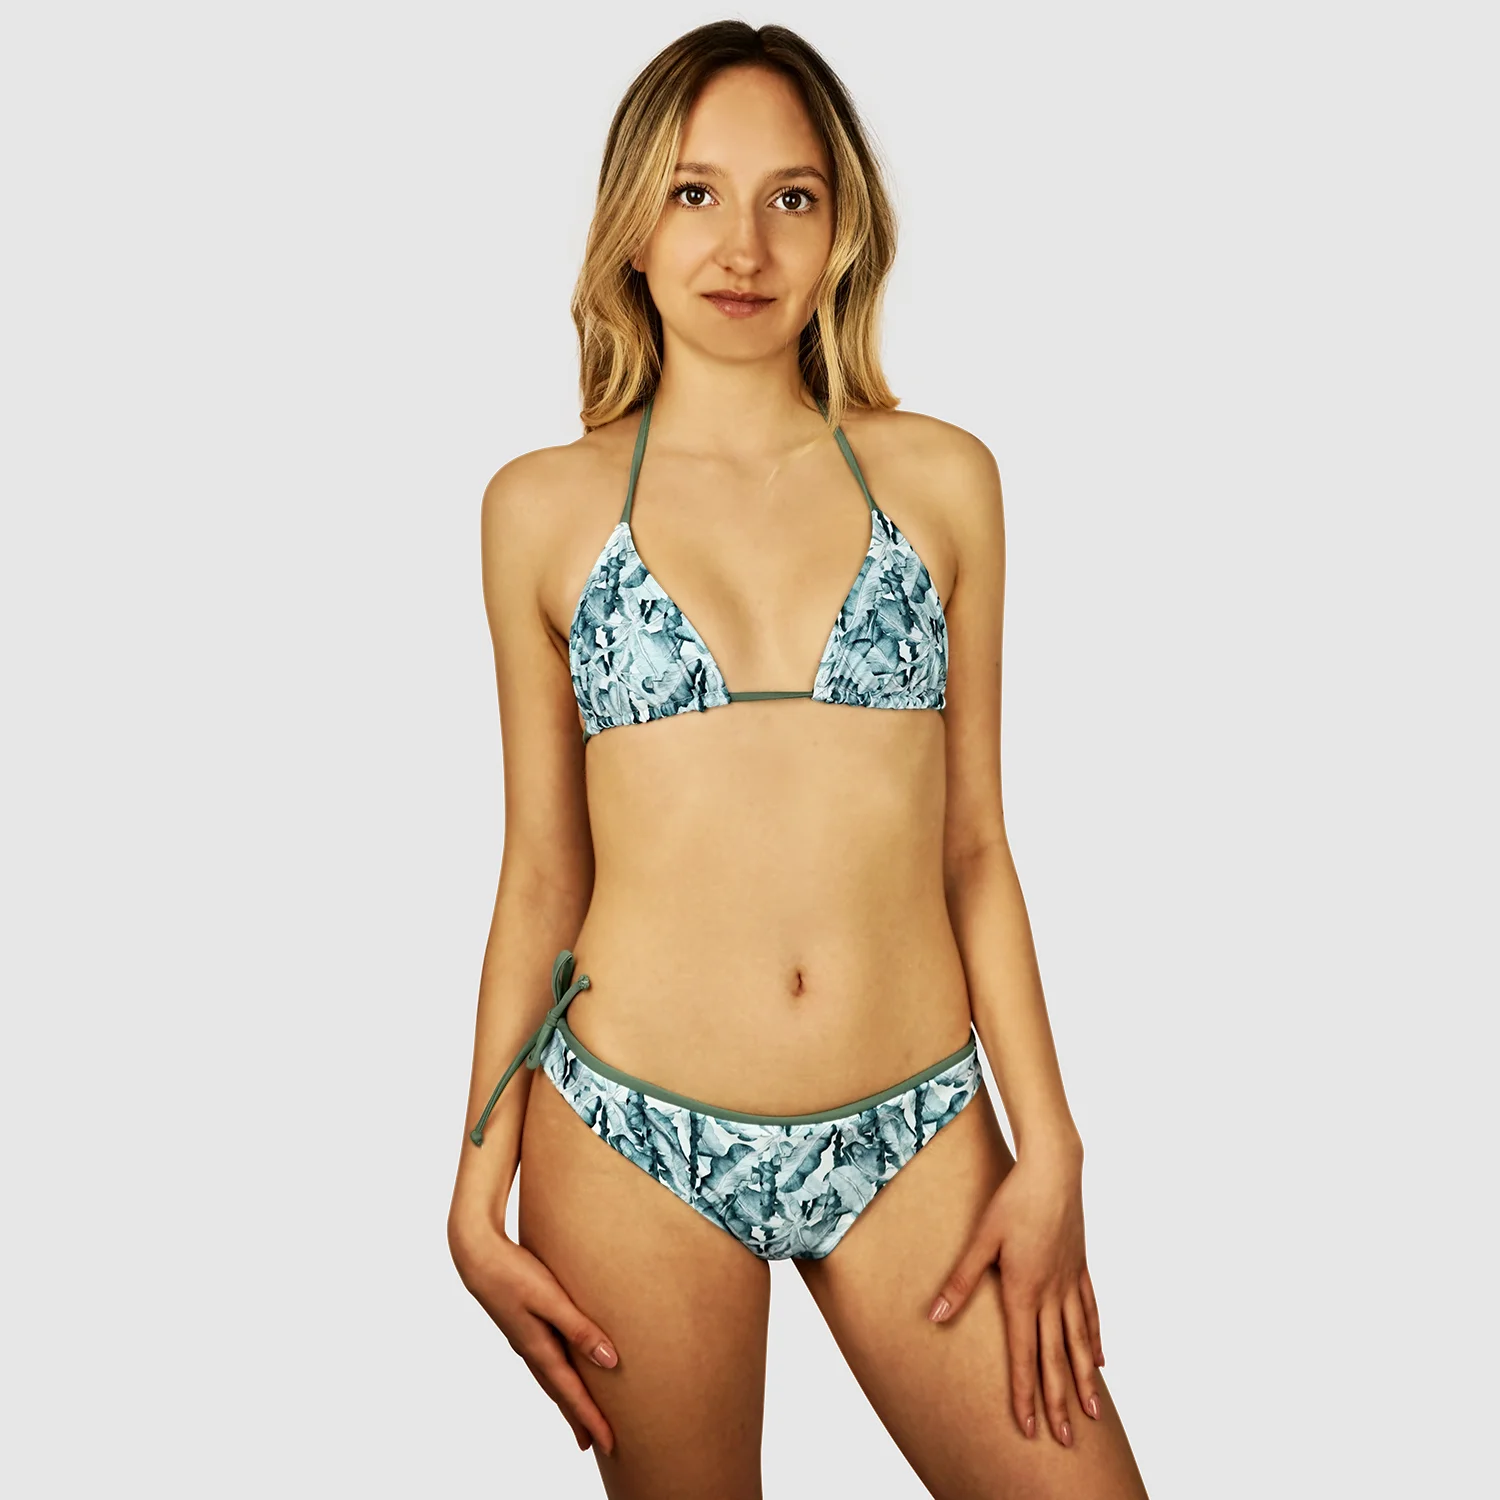 Model in grünem Bikini aus nachhaltigem Material